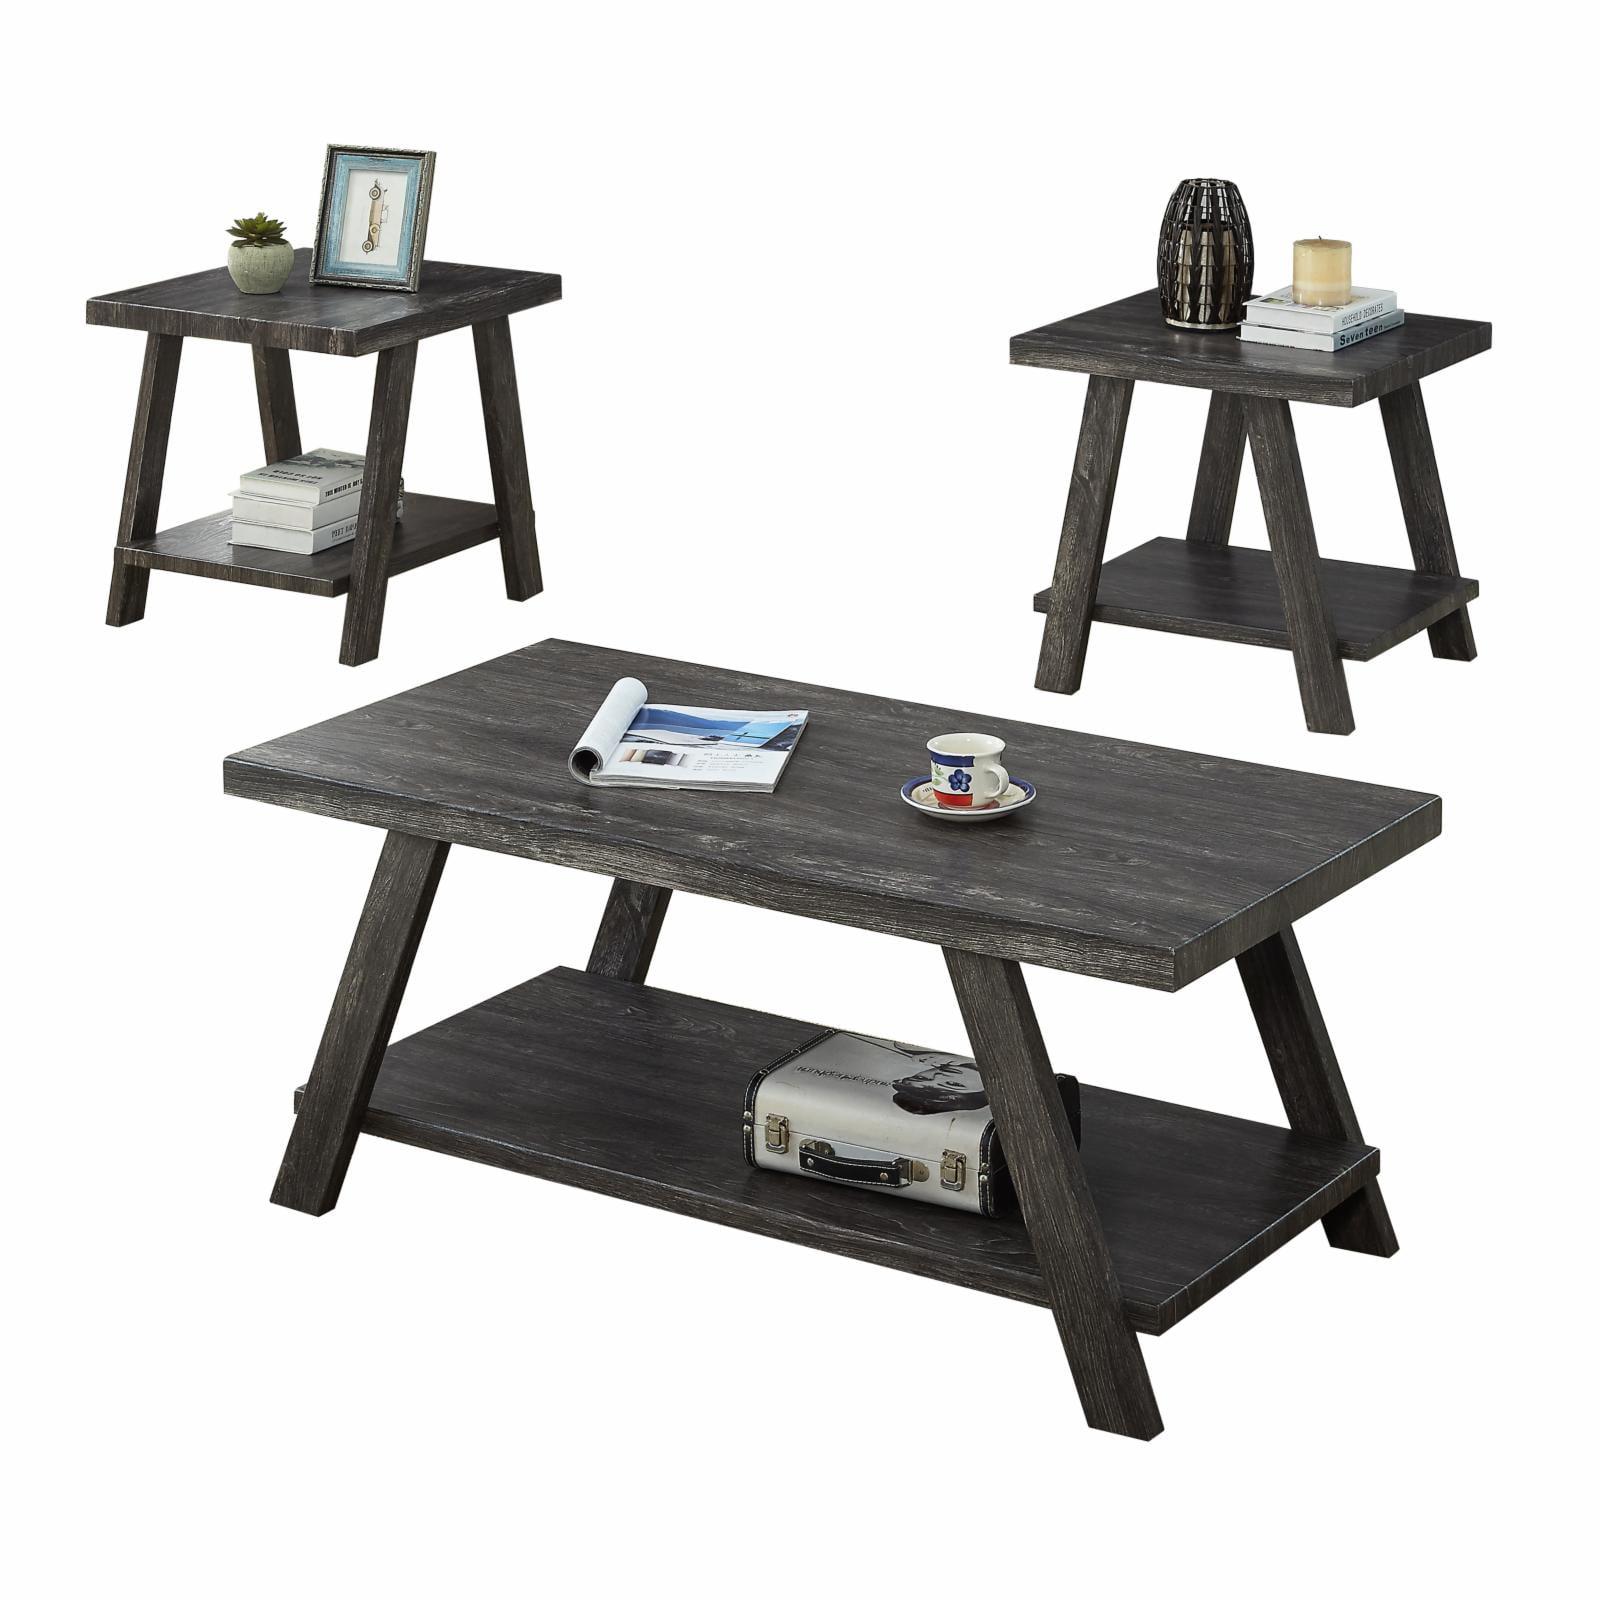 Charcoal Finish Craftsman-Era Inspired Wood Coffee Table Set